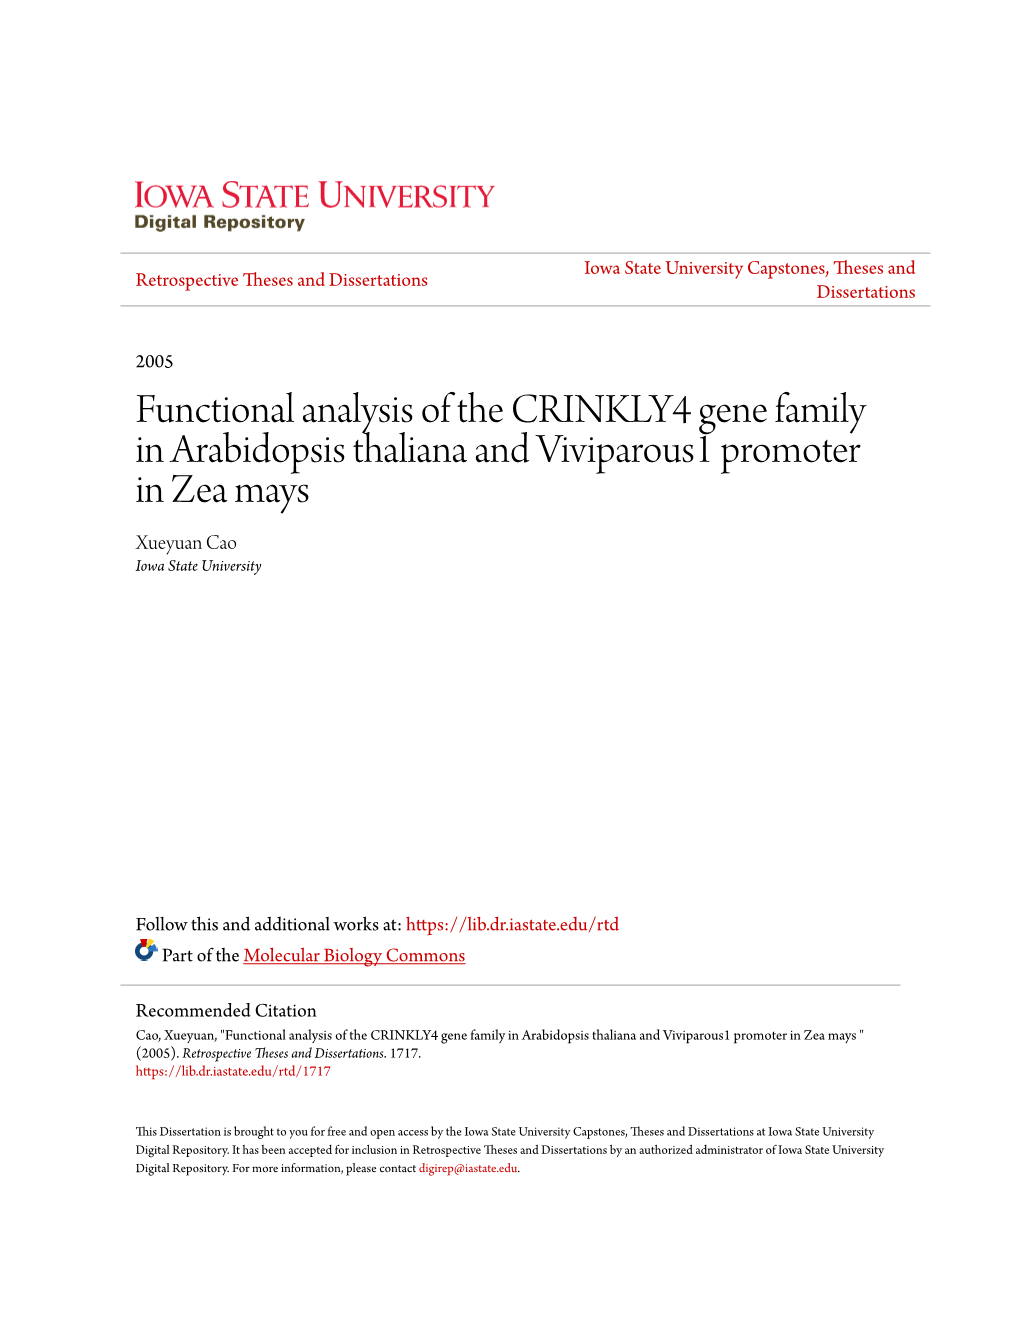 Functional Analysis of the CRINKLY4 Gene Family in Arabidopsis Thaliana and Viviparous1 Promoter in Zea Mays Xueyuan Cao Iowa State University